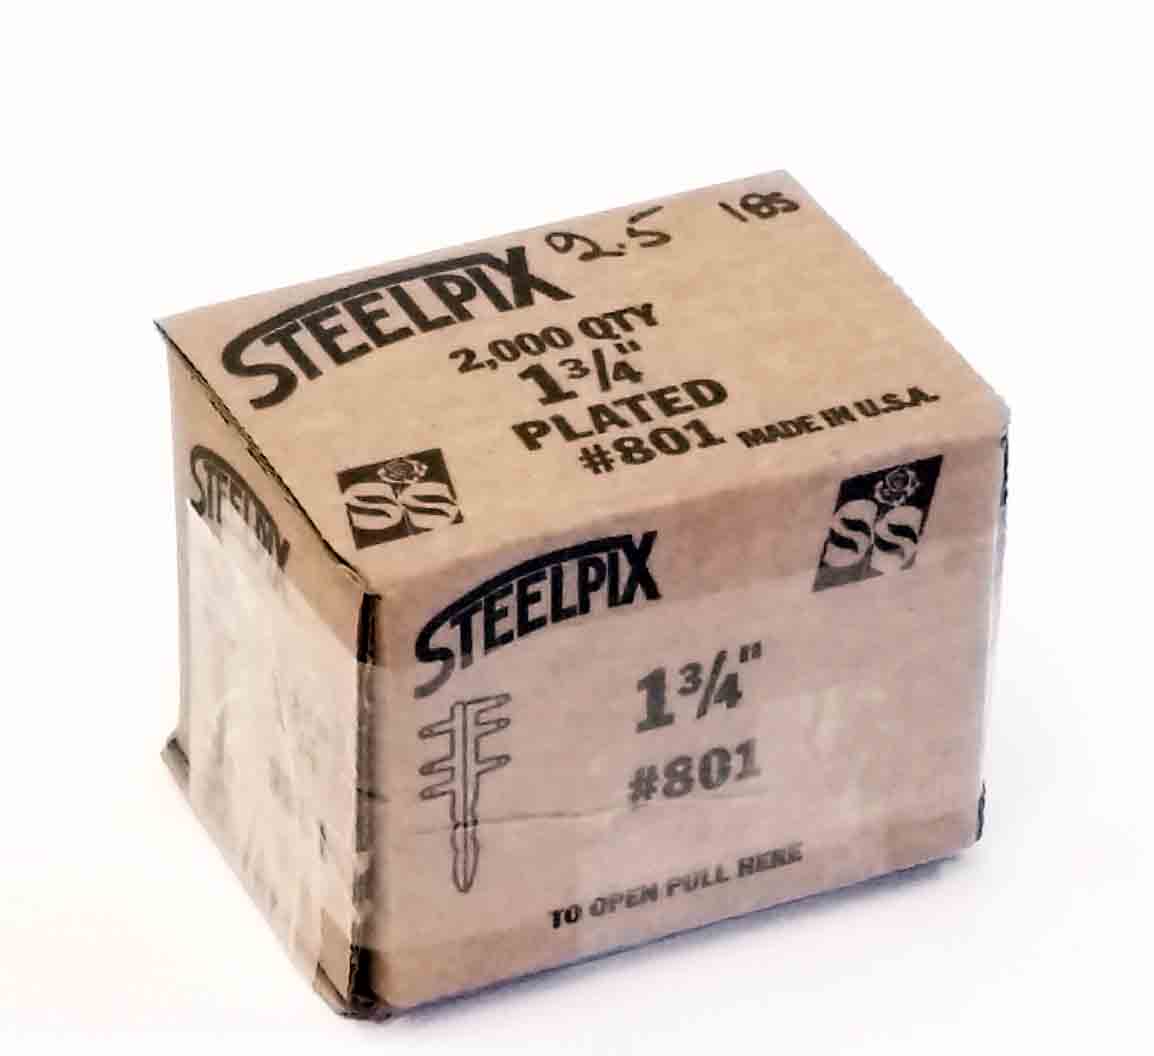 801 - 1.75" Steel Pix  - 21.55 box of 2,000